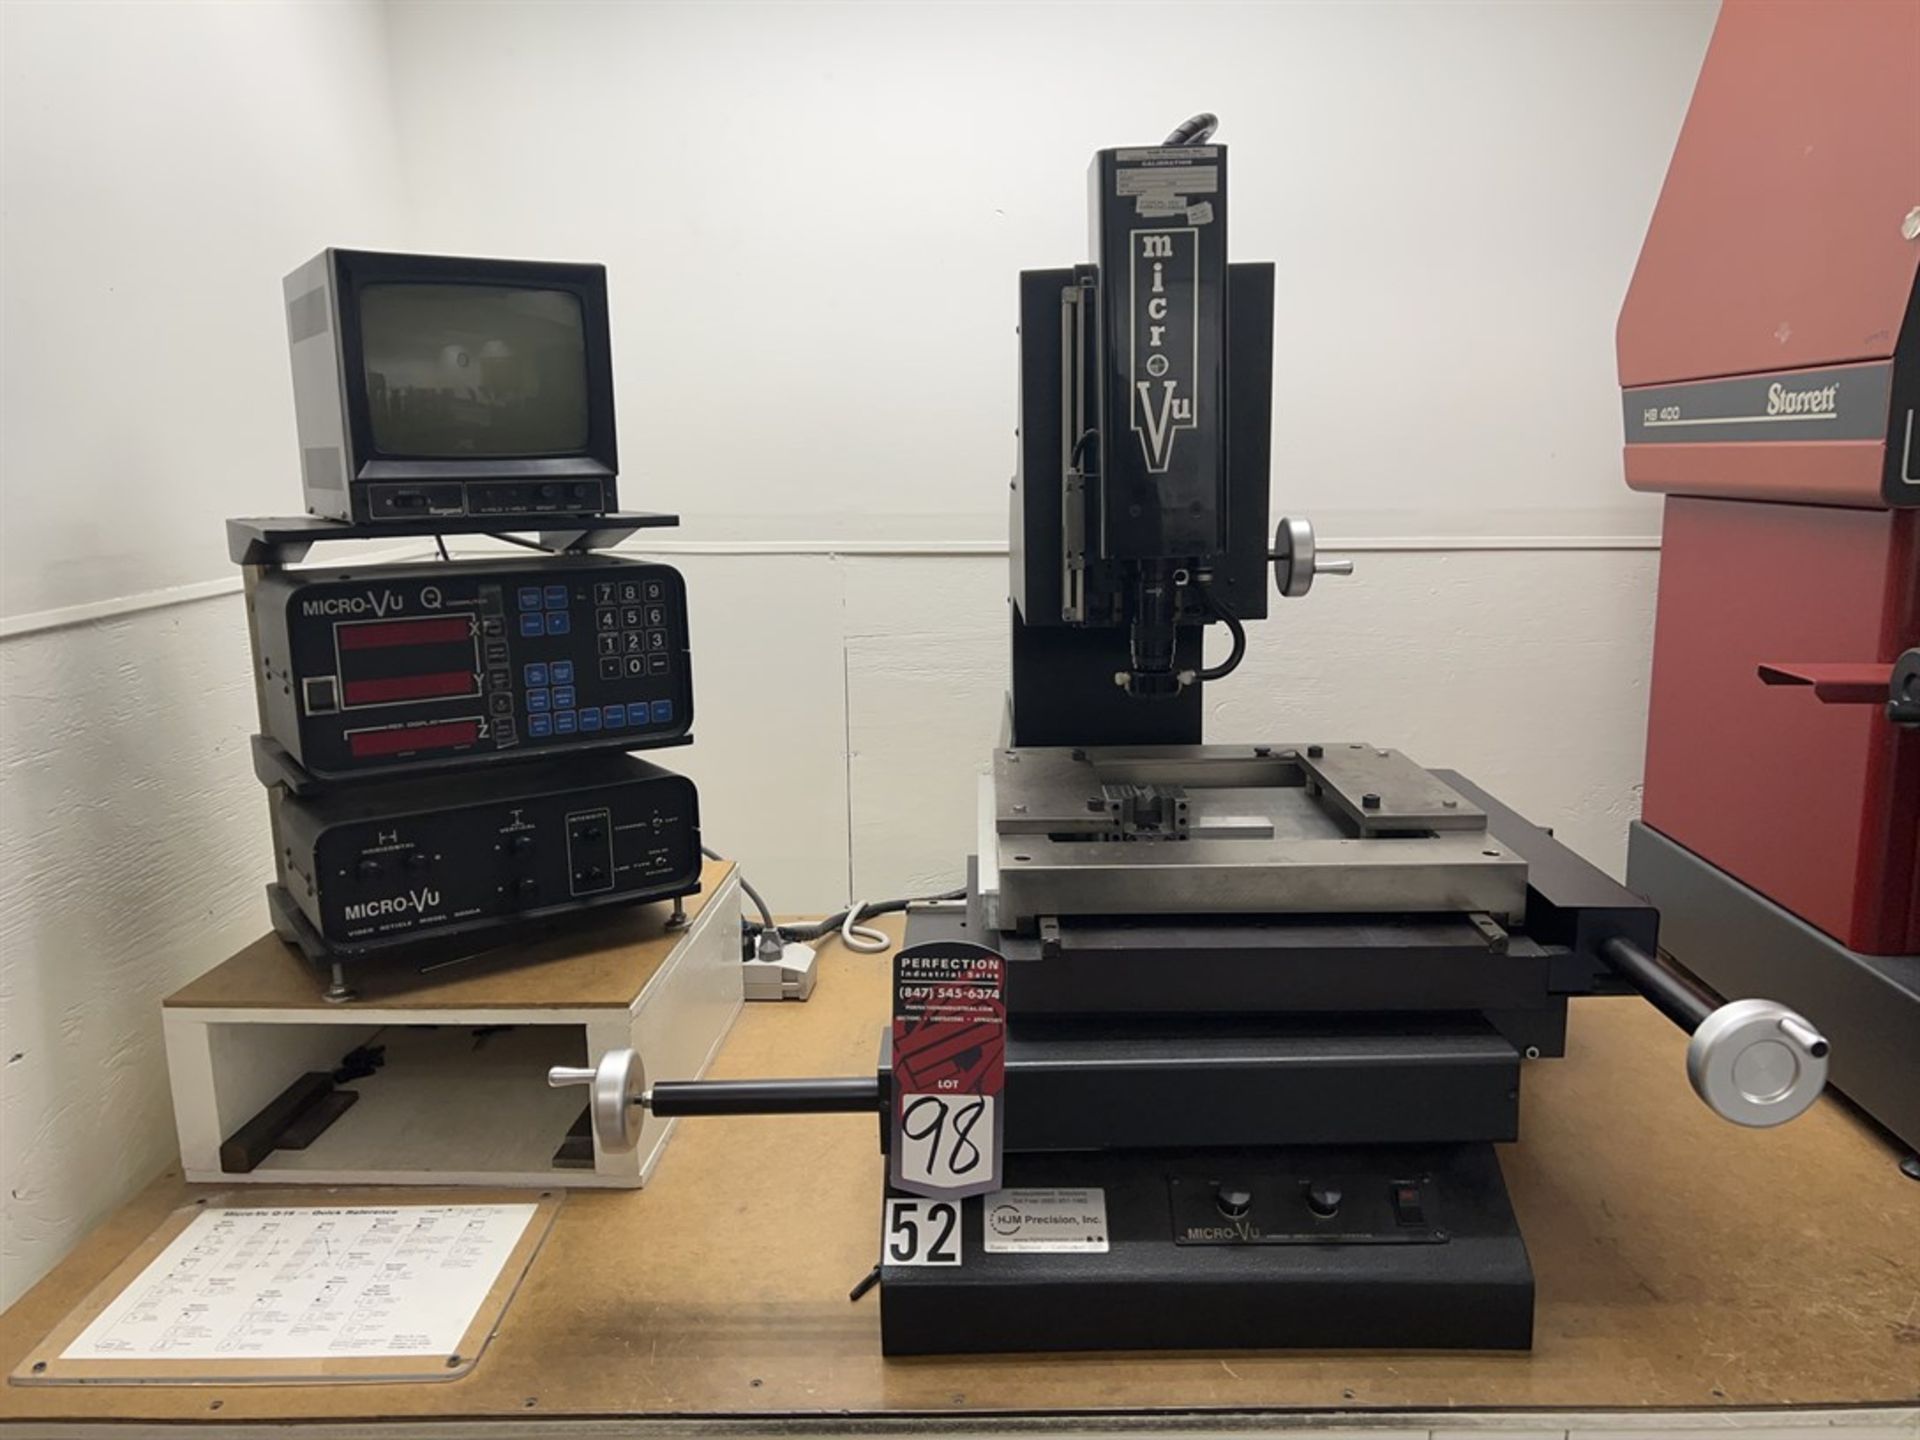 MICRO VU 14”x 14” Video Measuring Machine, s/n na, Mod 9050A Video Reticle, 3 Axis DRO